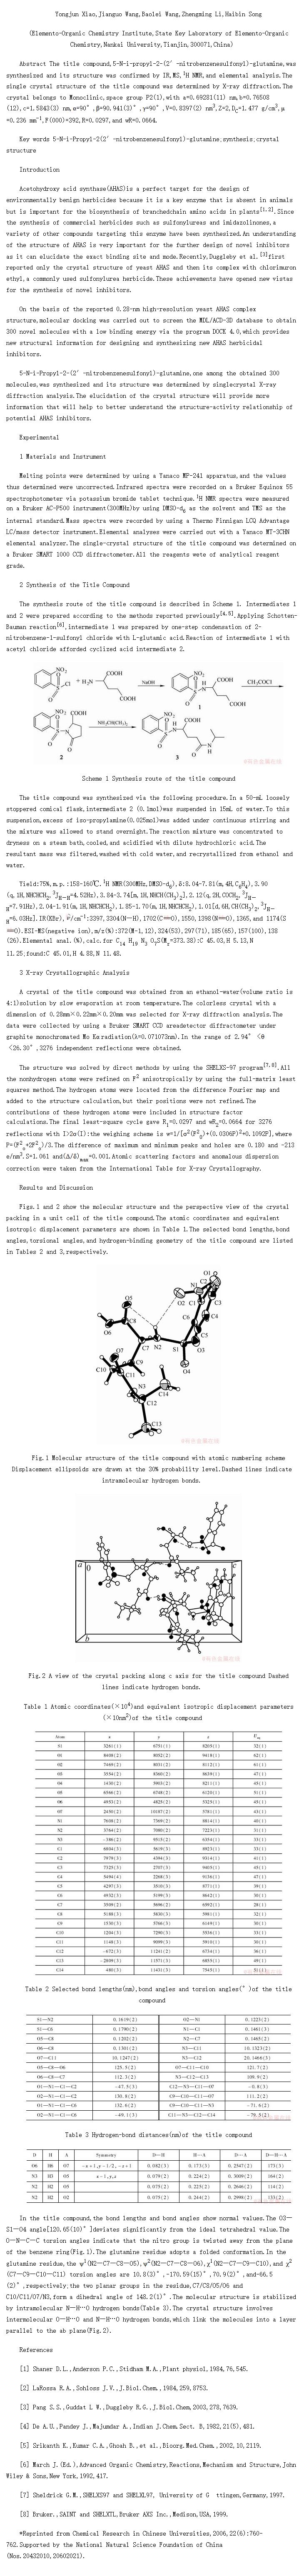 Synthesis and Crystal Structure of 5-N-i-Propyl-2-(2-nitrobenzenesulfonyl)-glutamine